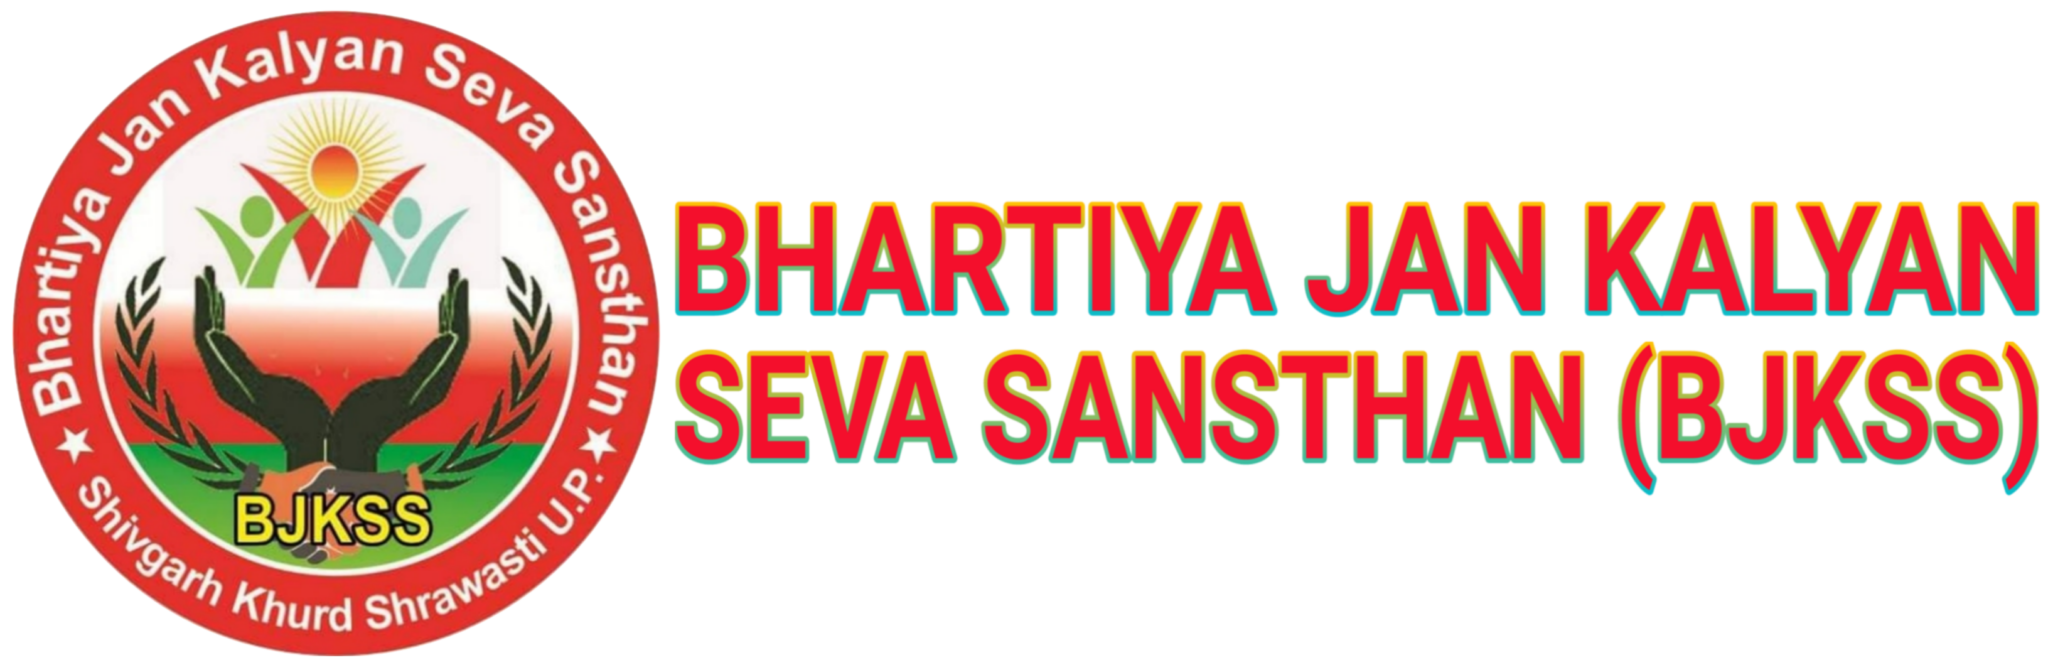 Bhartiya Jan Kalyan Seva Sansthan logo